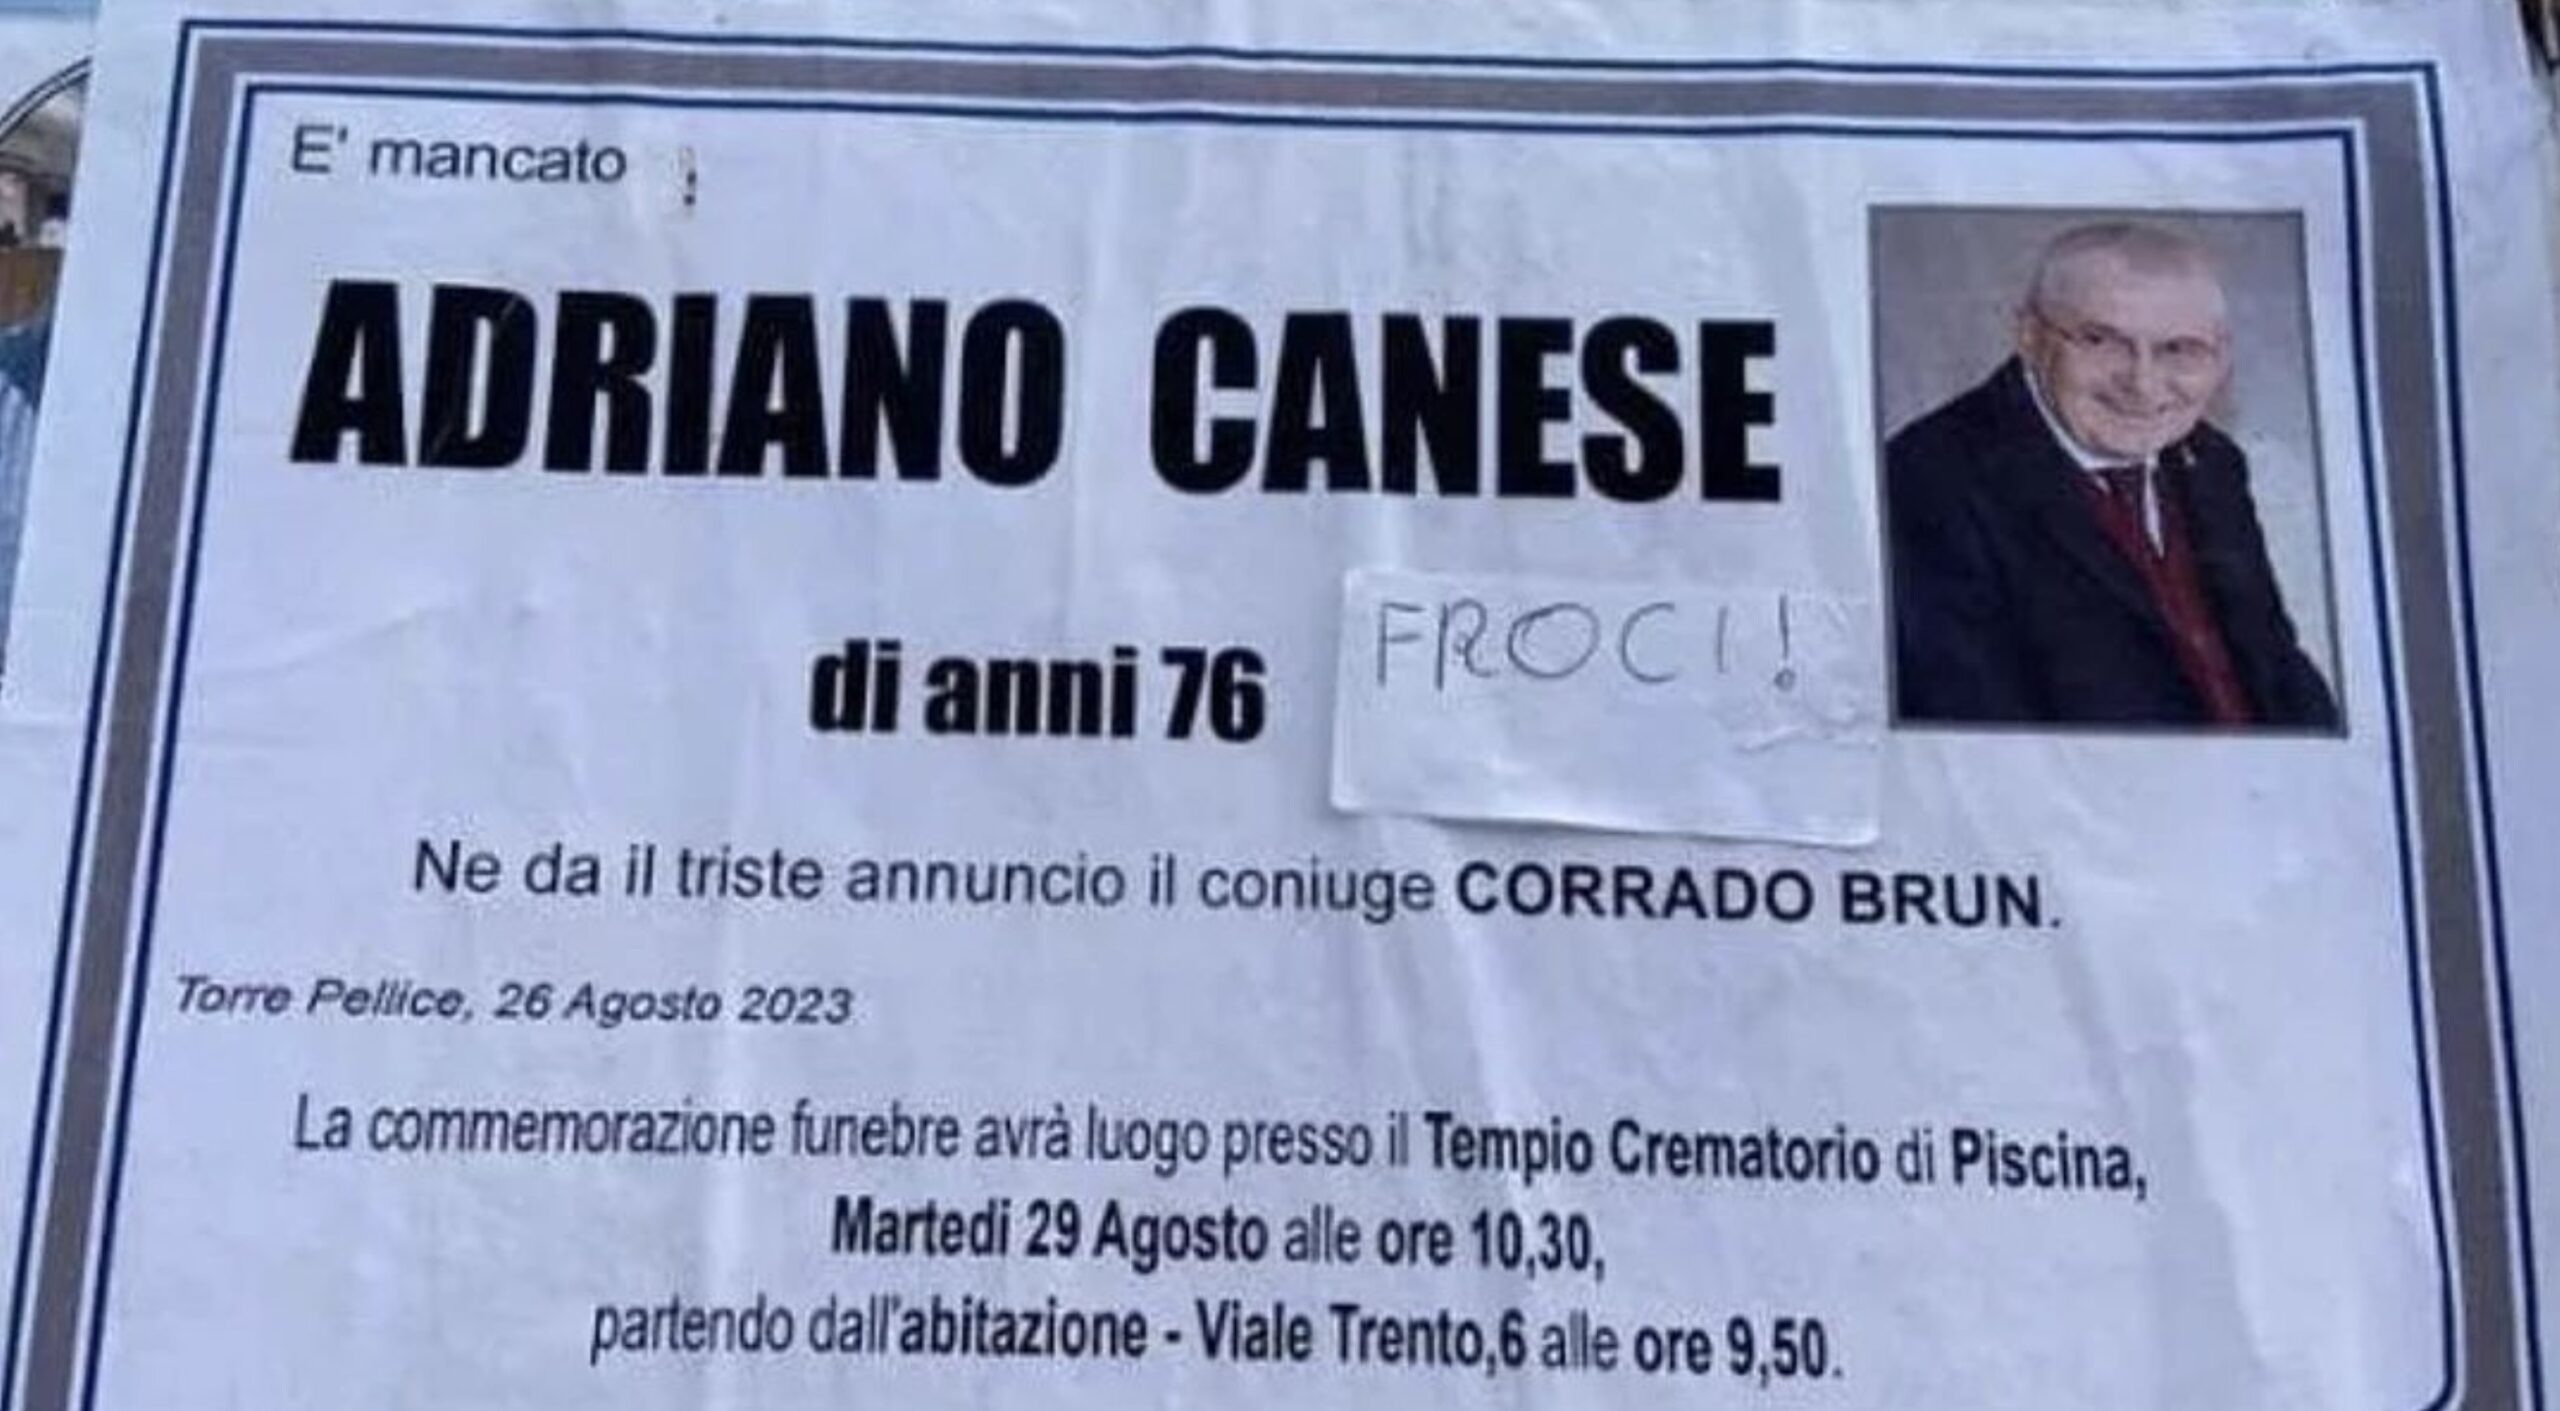 Adriano Canese